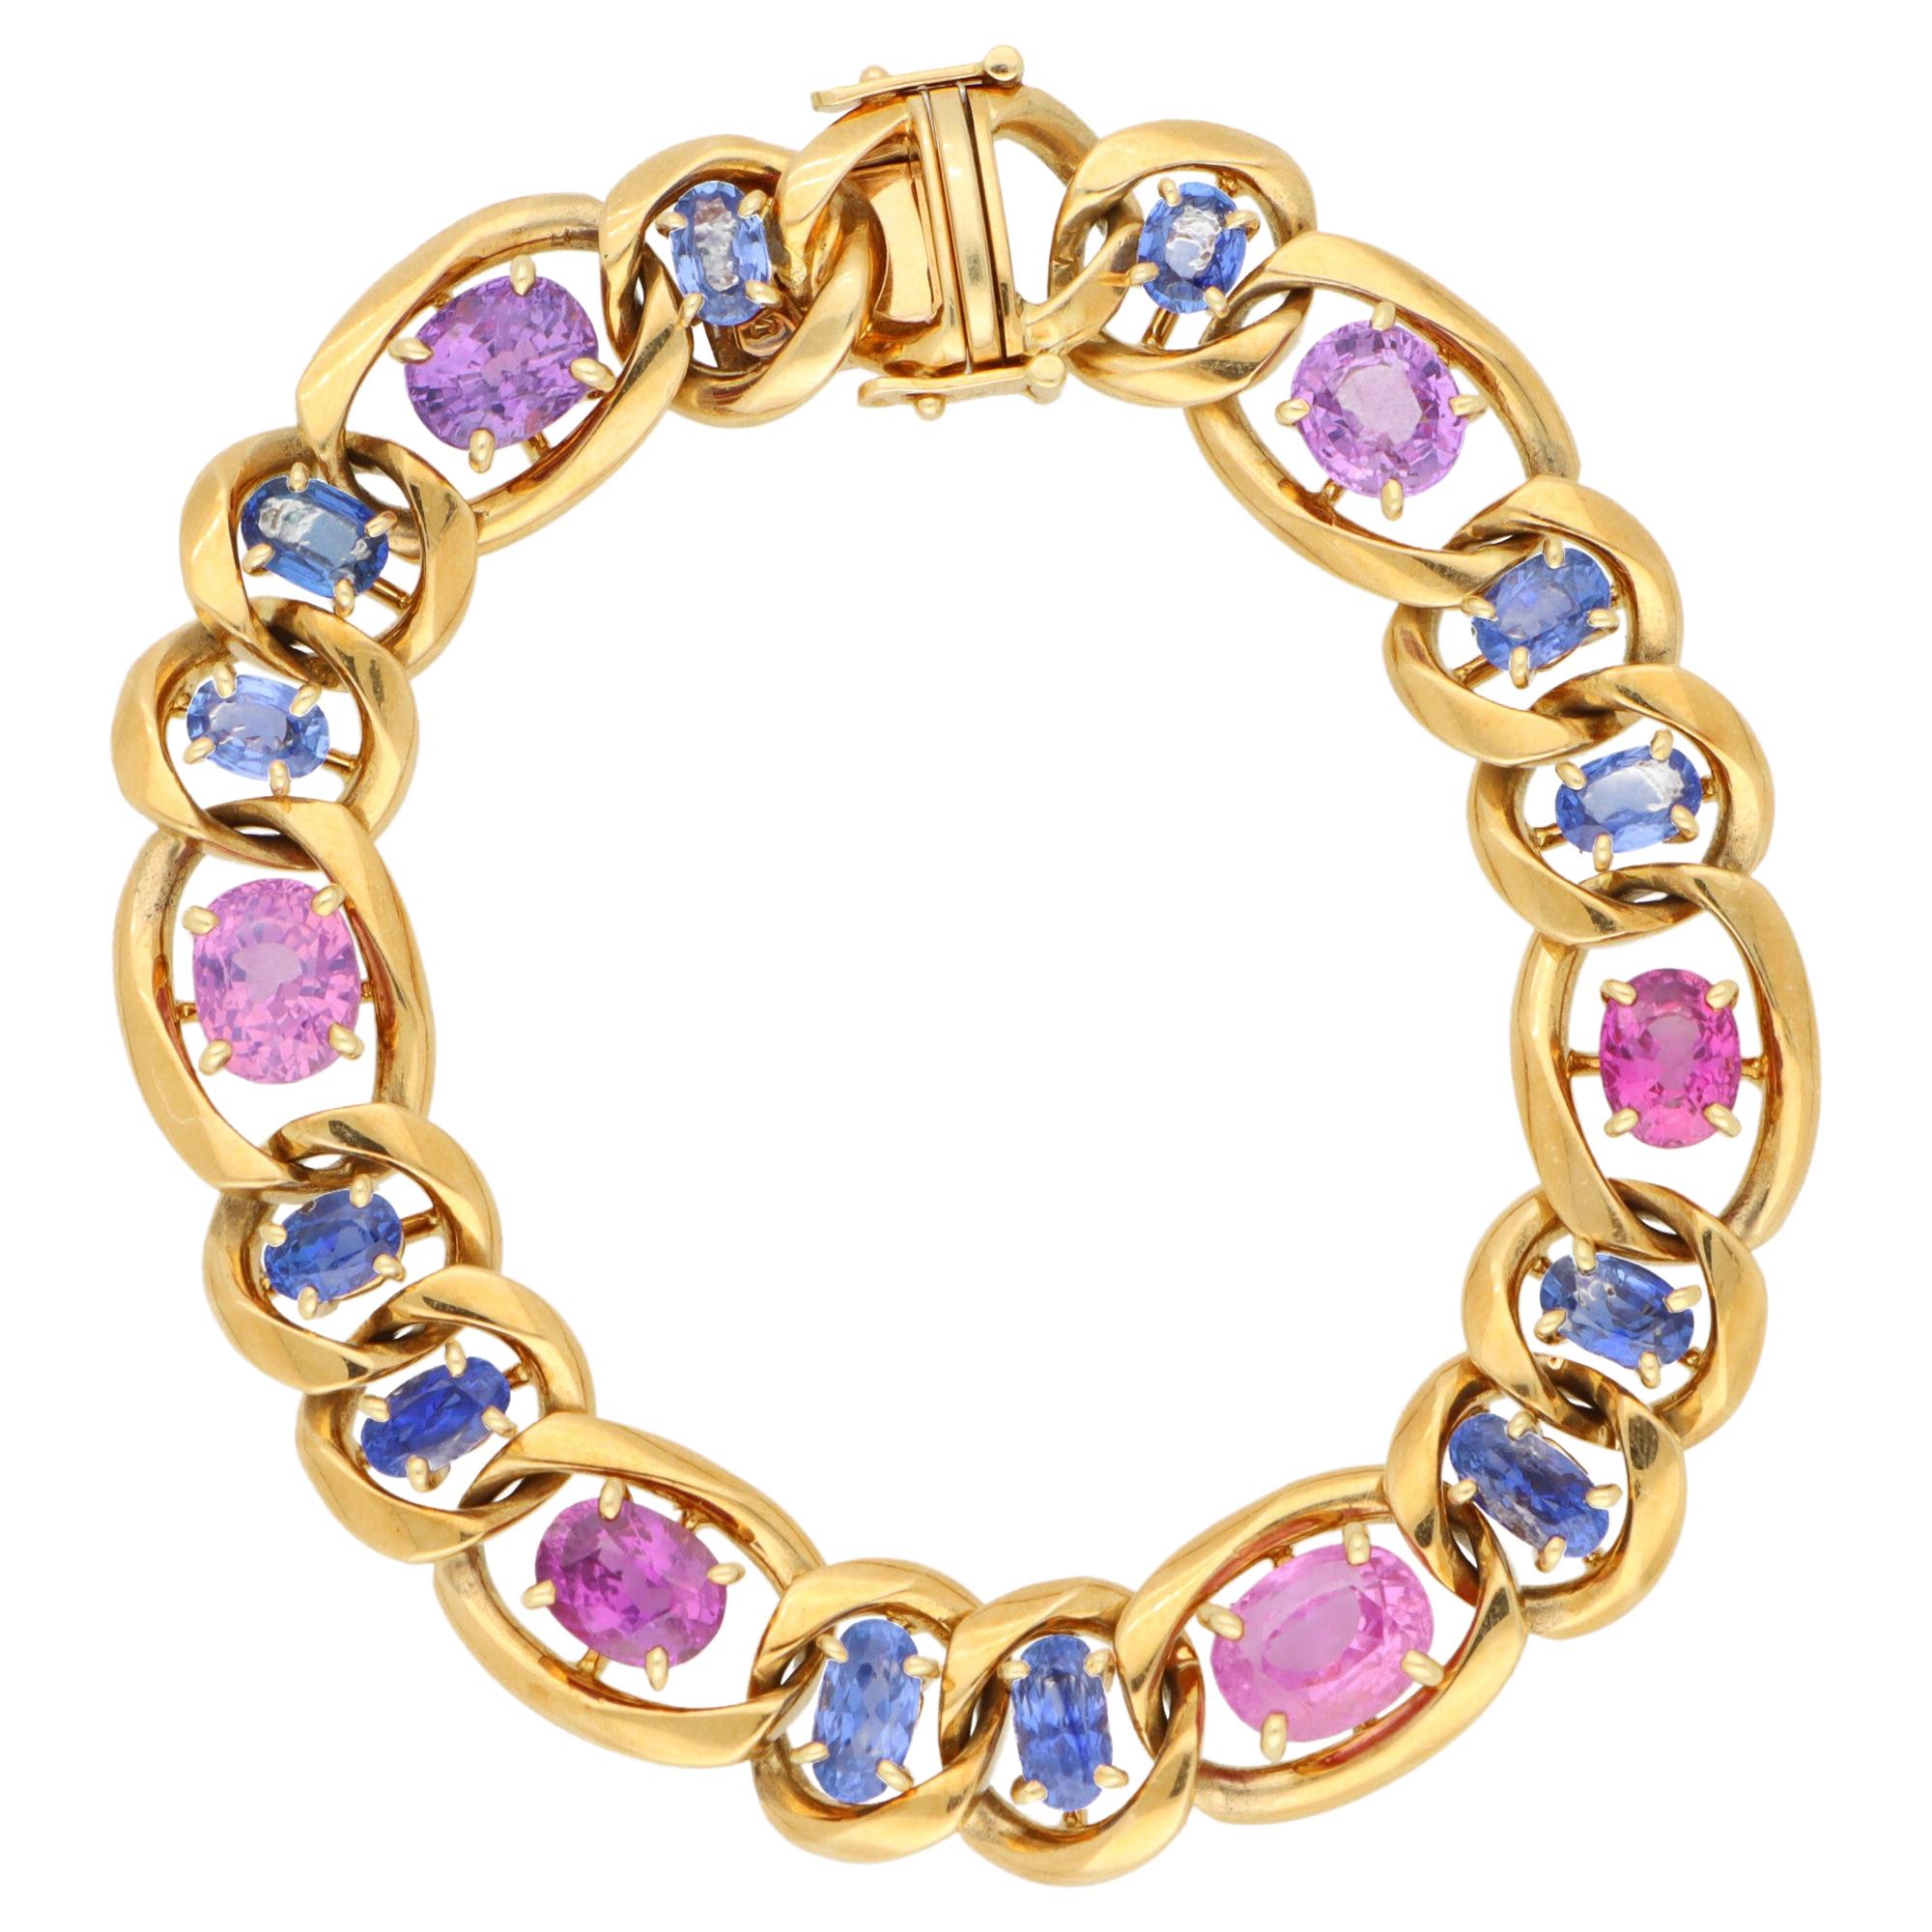 Vintage Pastel Pink and Blue Sapphire Link Bracelet Set in 18k Yellow Gold